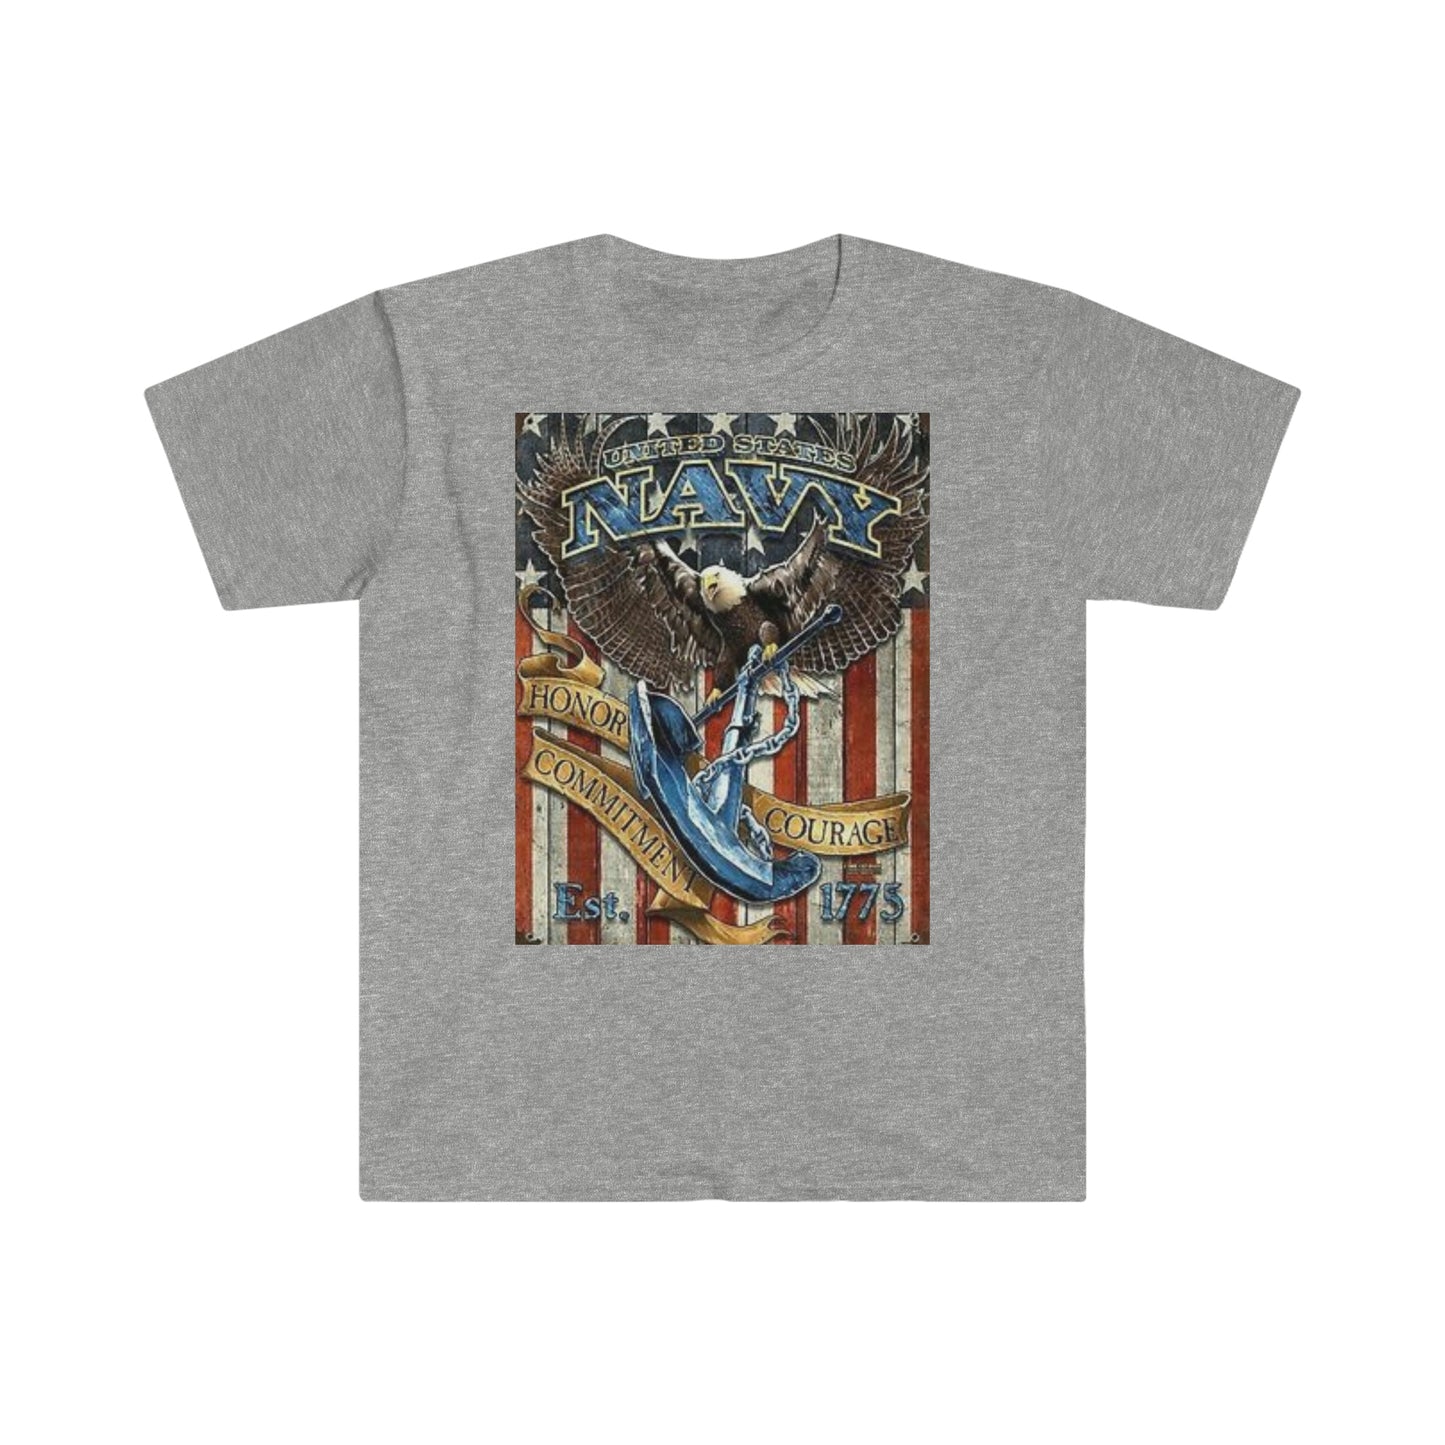 US Navy Decorative T-shirt